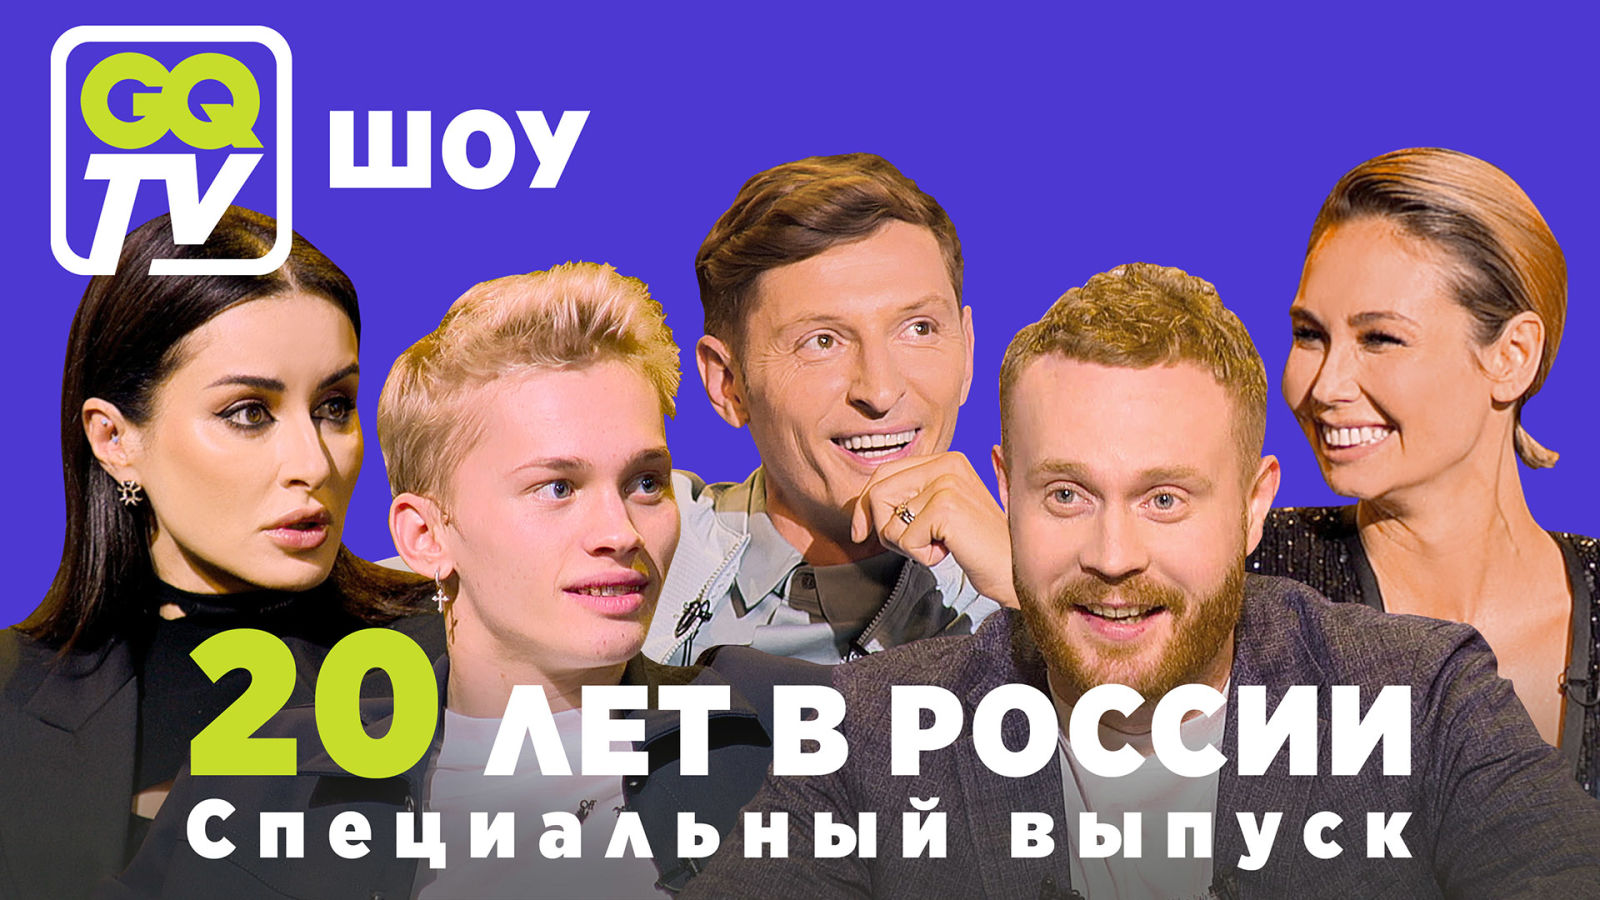 GQ TV ШОУ: БАСТА, ДОРОХОВ, МИЛОХИН И ДРУГИЕ (короткая версия)